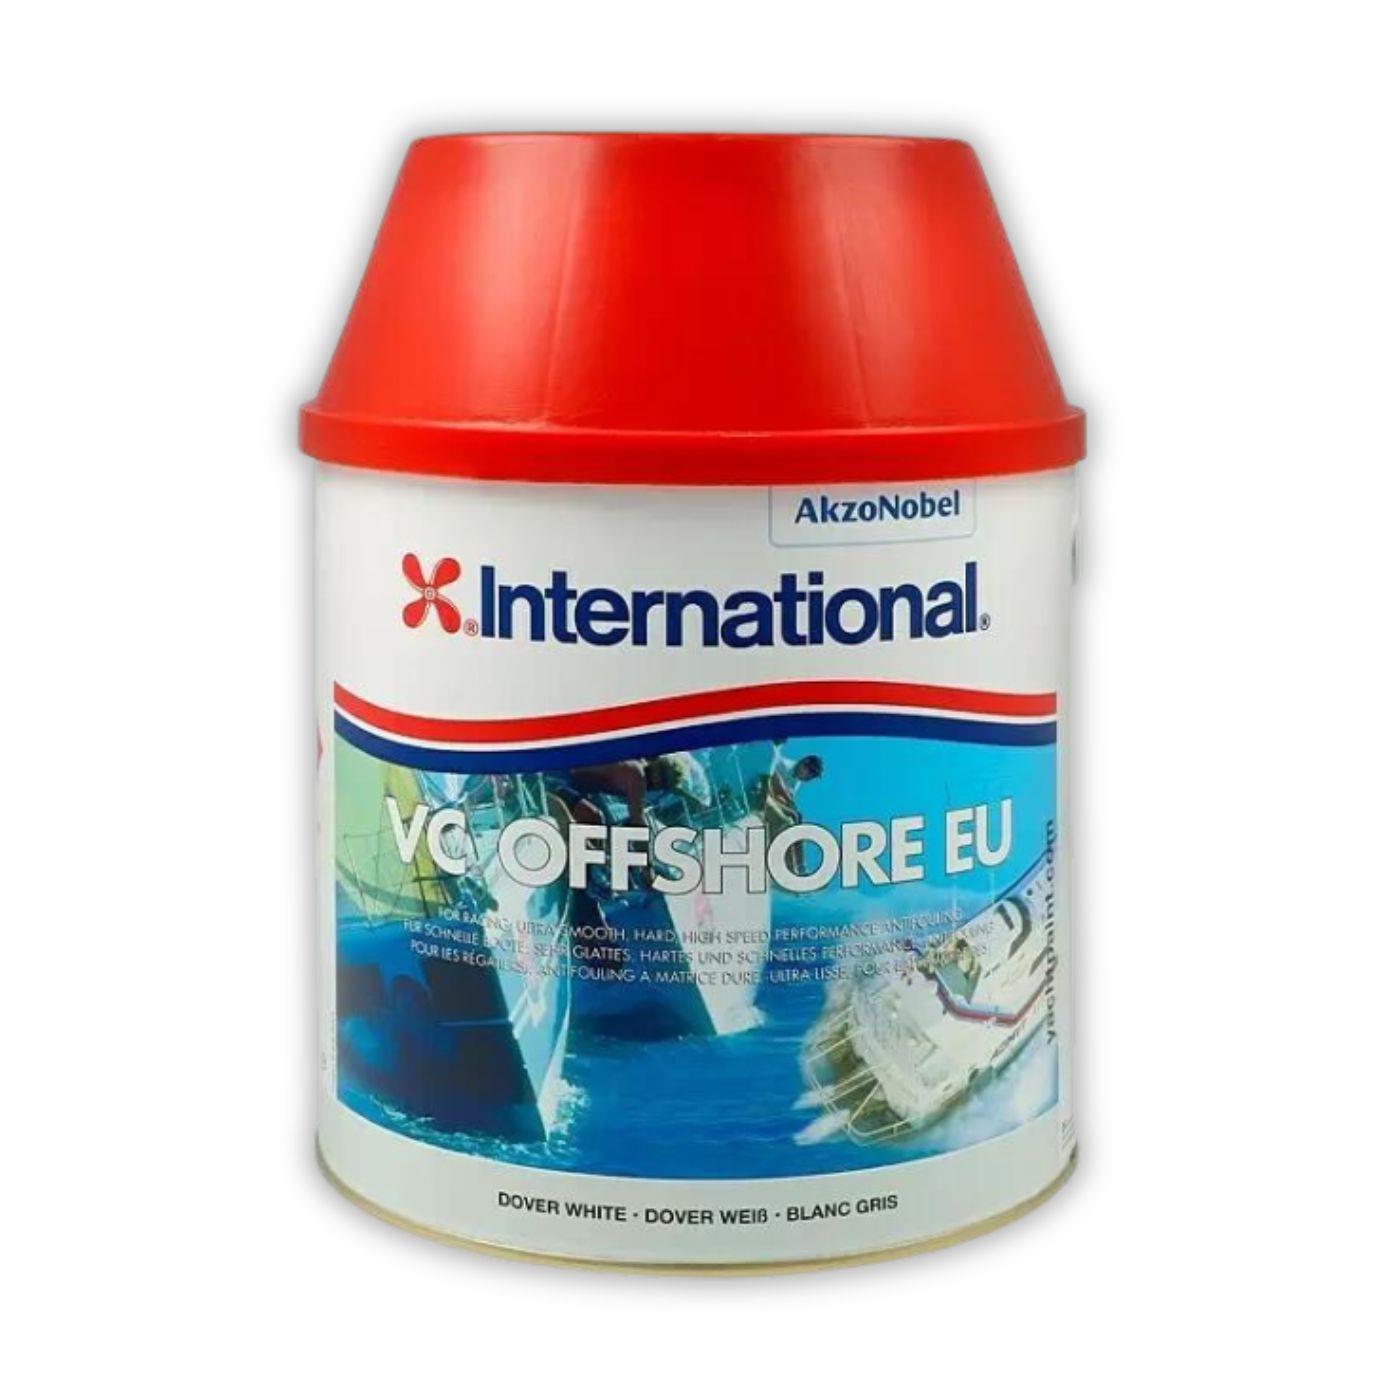 International VC-Offshore EU Antifouling dover-white 2 Liter